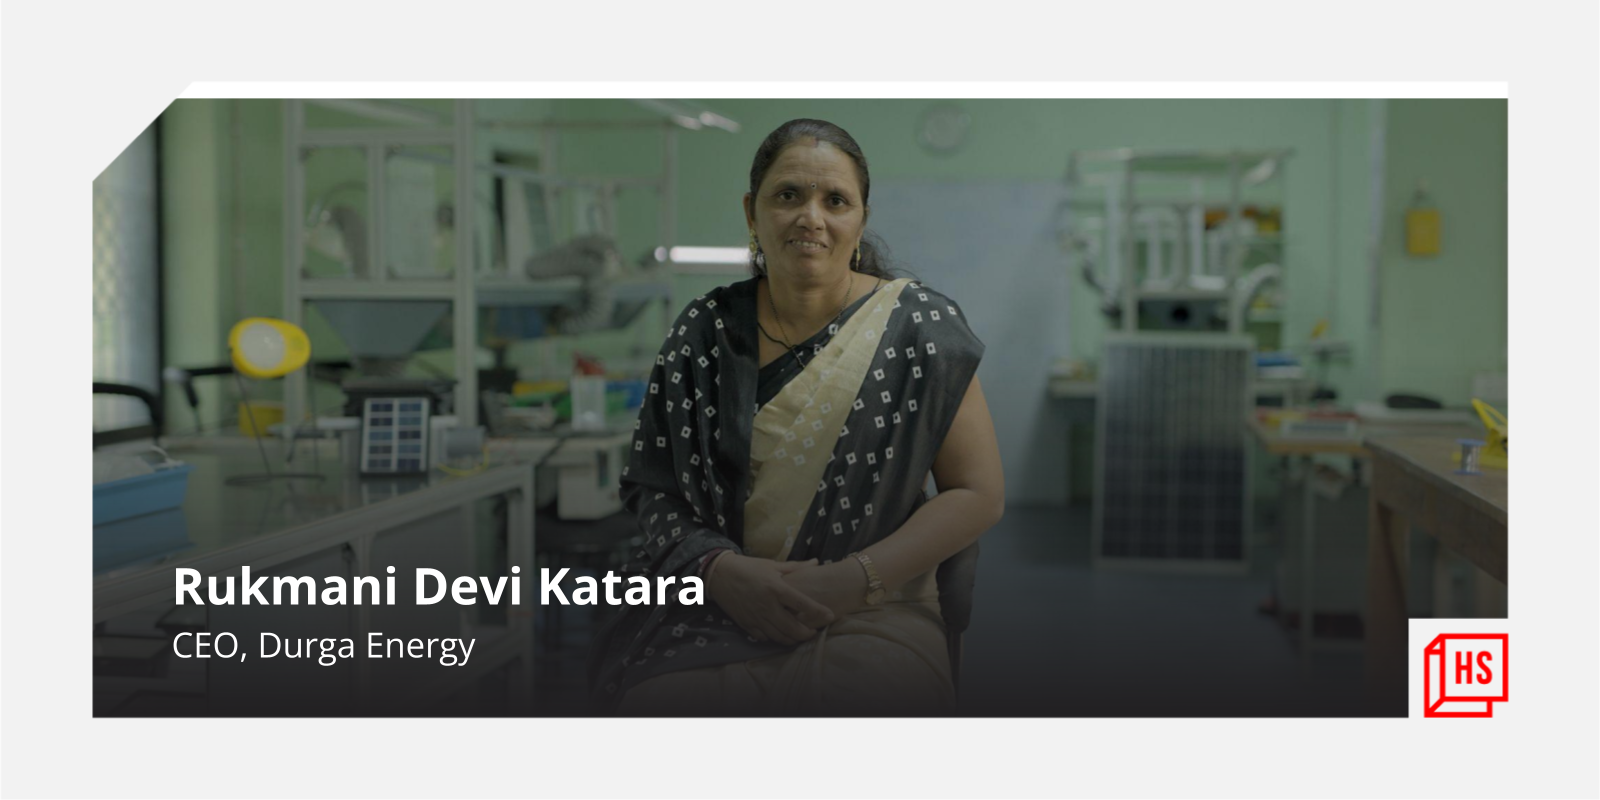 Meet Rukmani Devi Katara who is empowering women in Rajasthan using solar energy